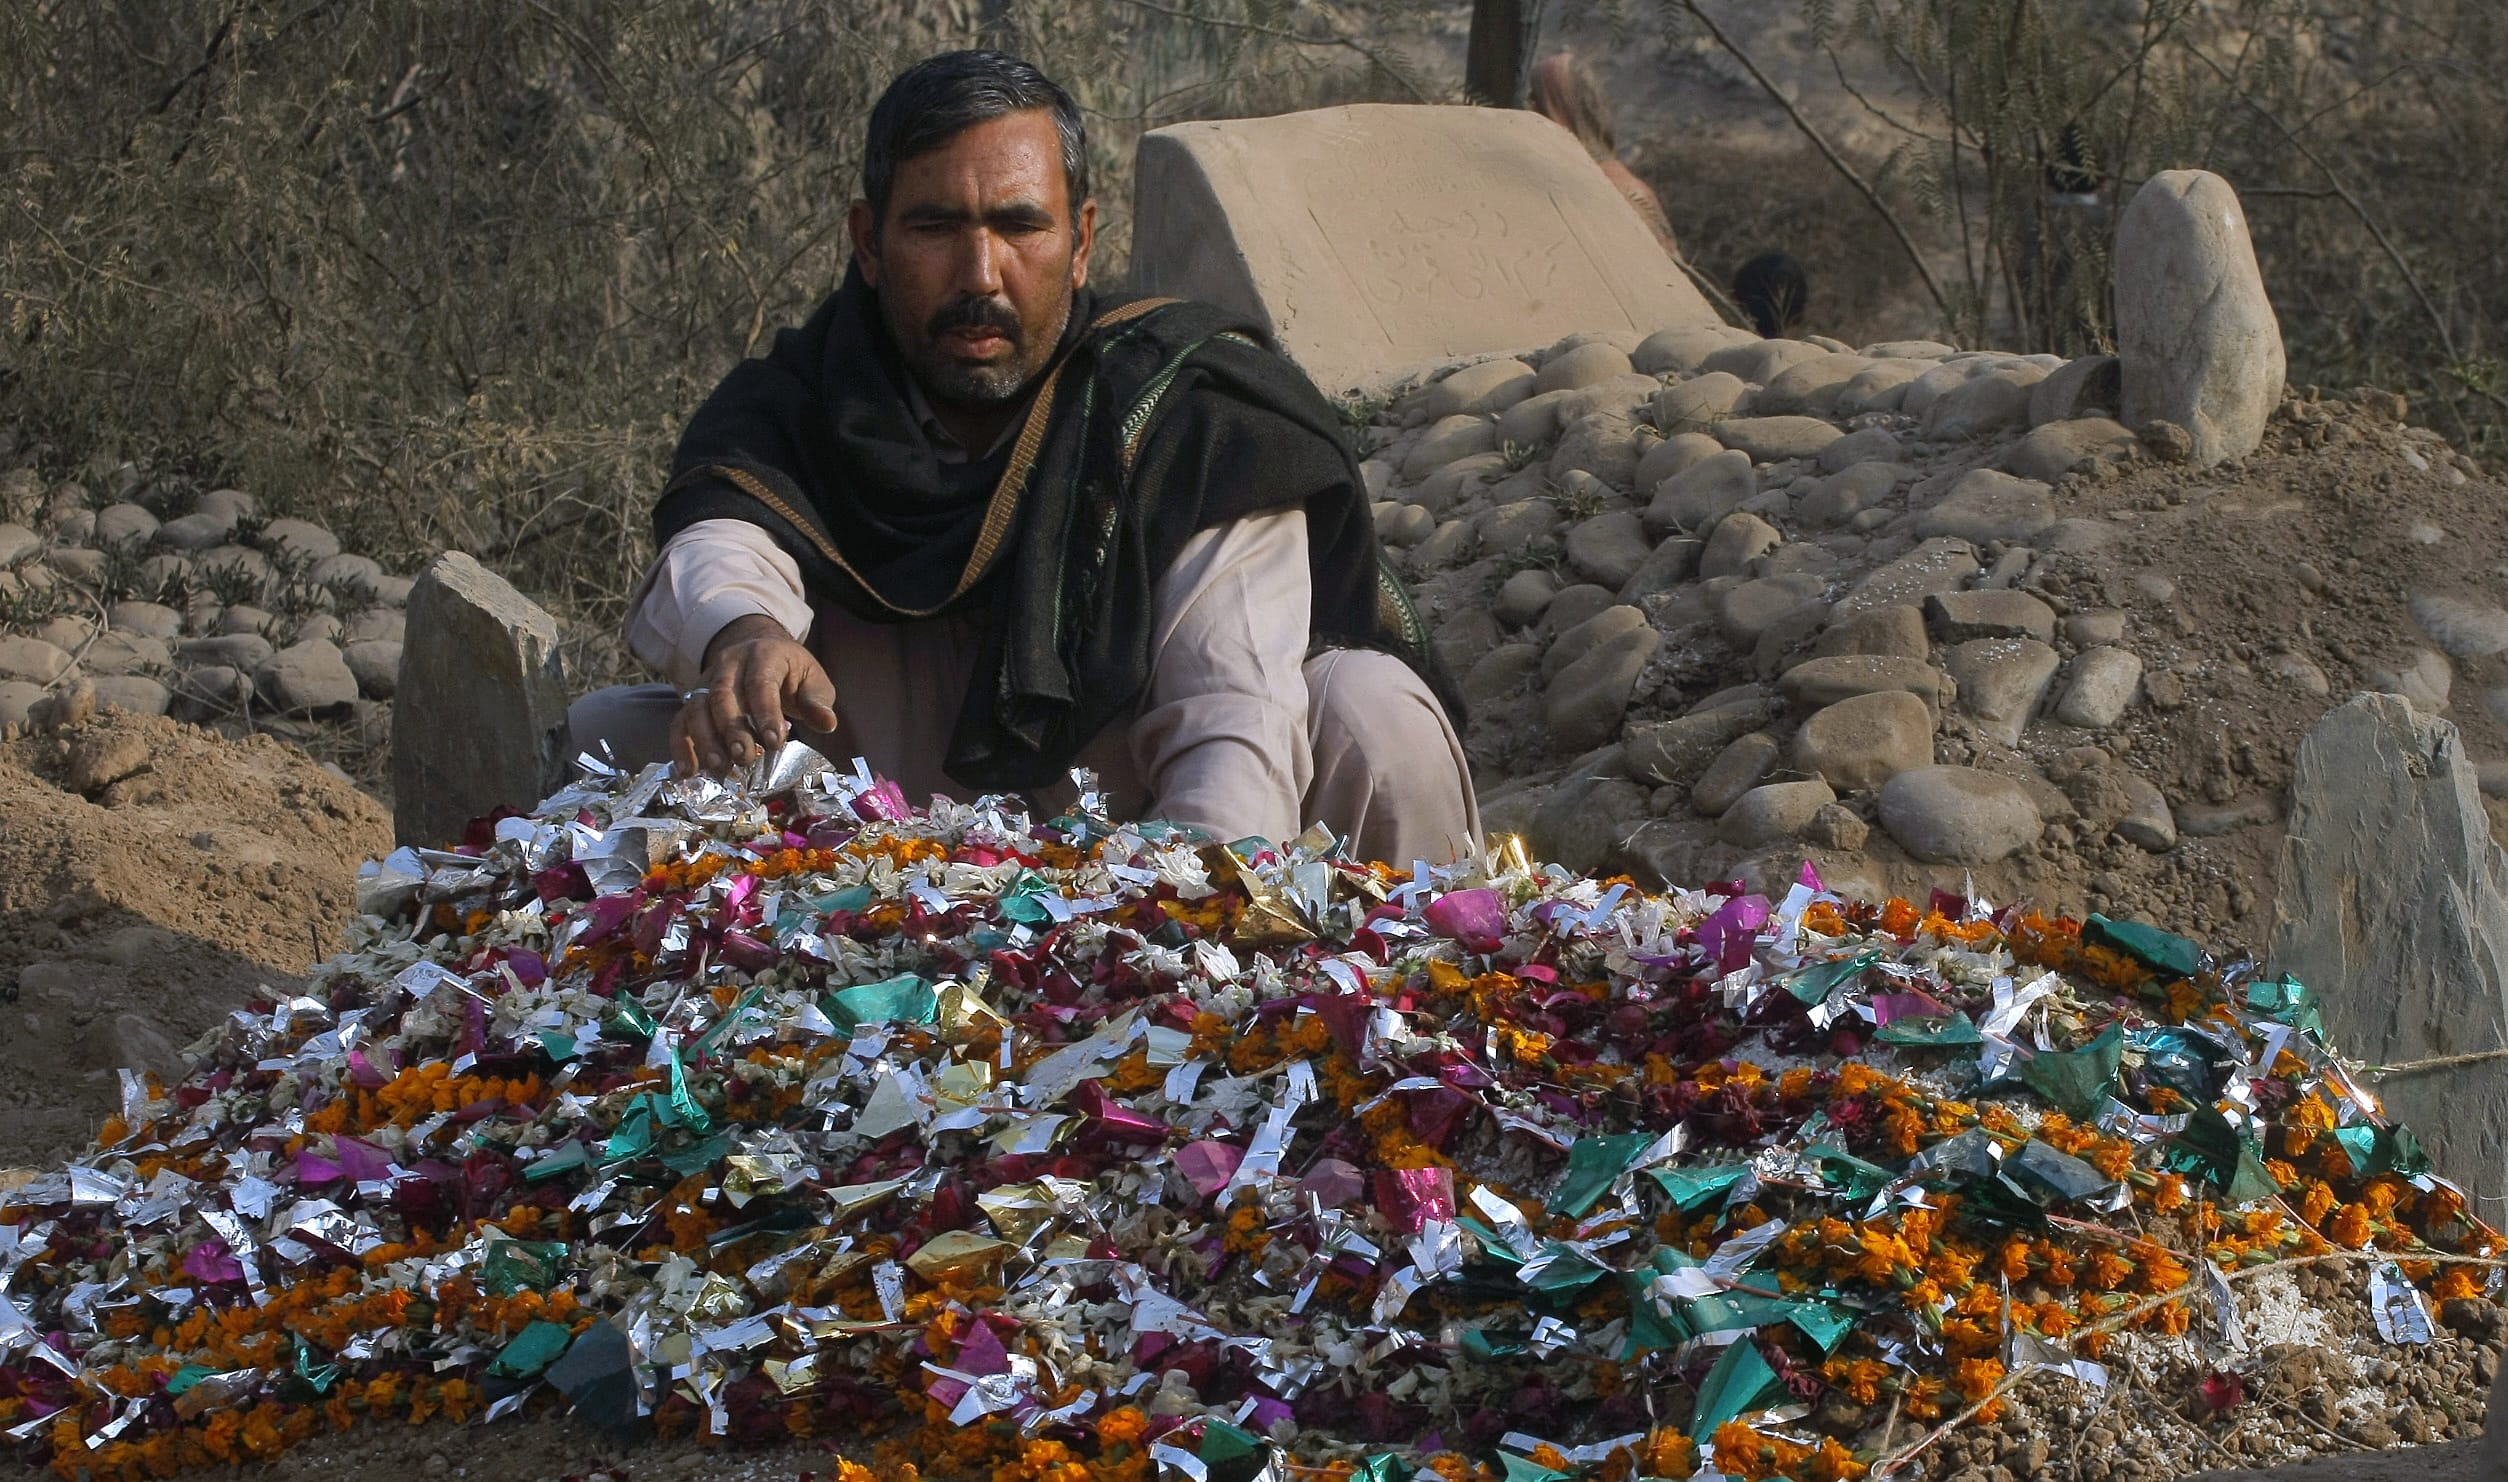 Pakistani gravedigger Taj Muhammad adjusts wreaths on a grave Saturday at the Rahman Baba graveyard in Peshawar, Pakistan.